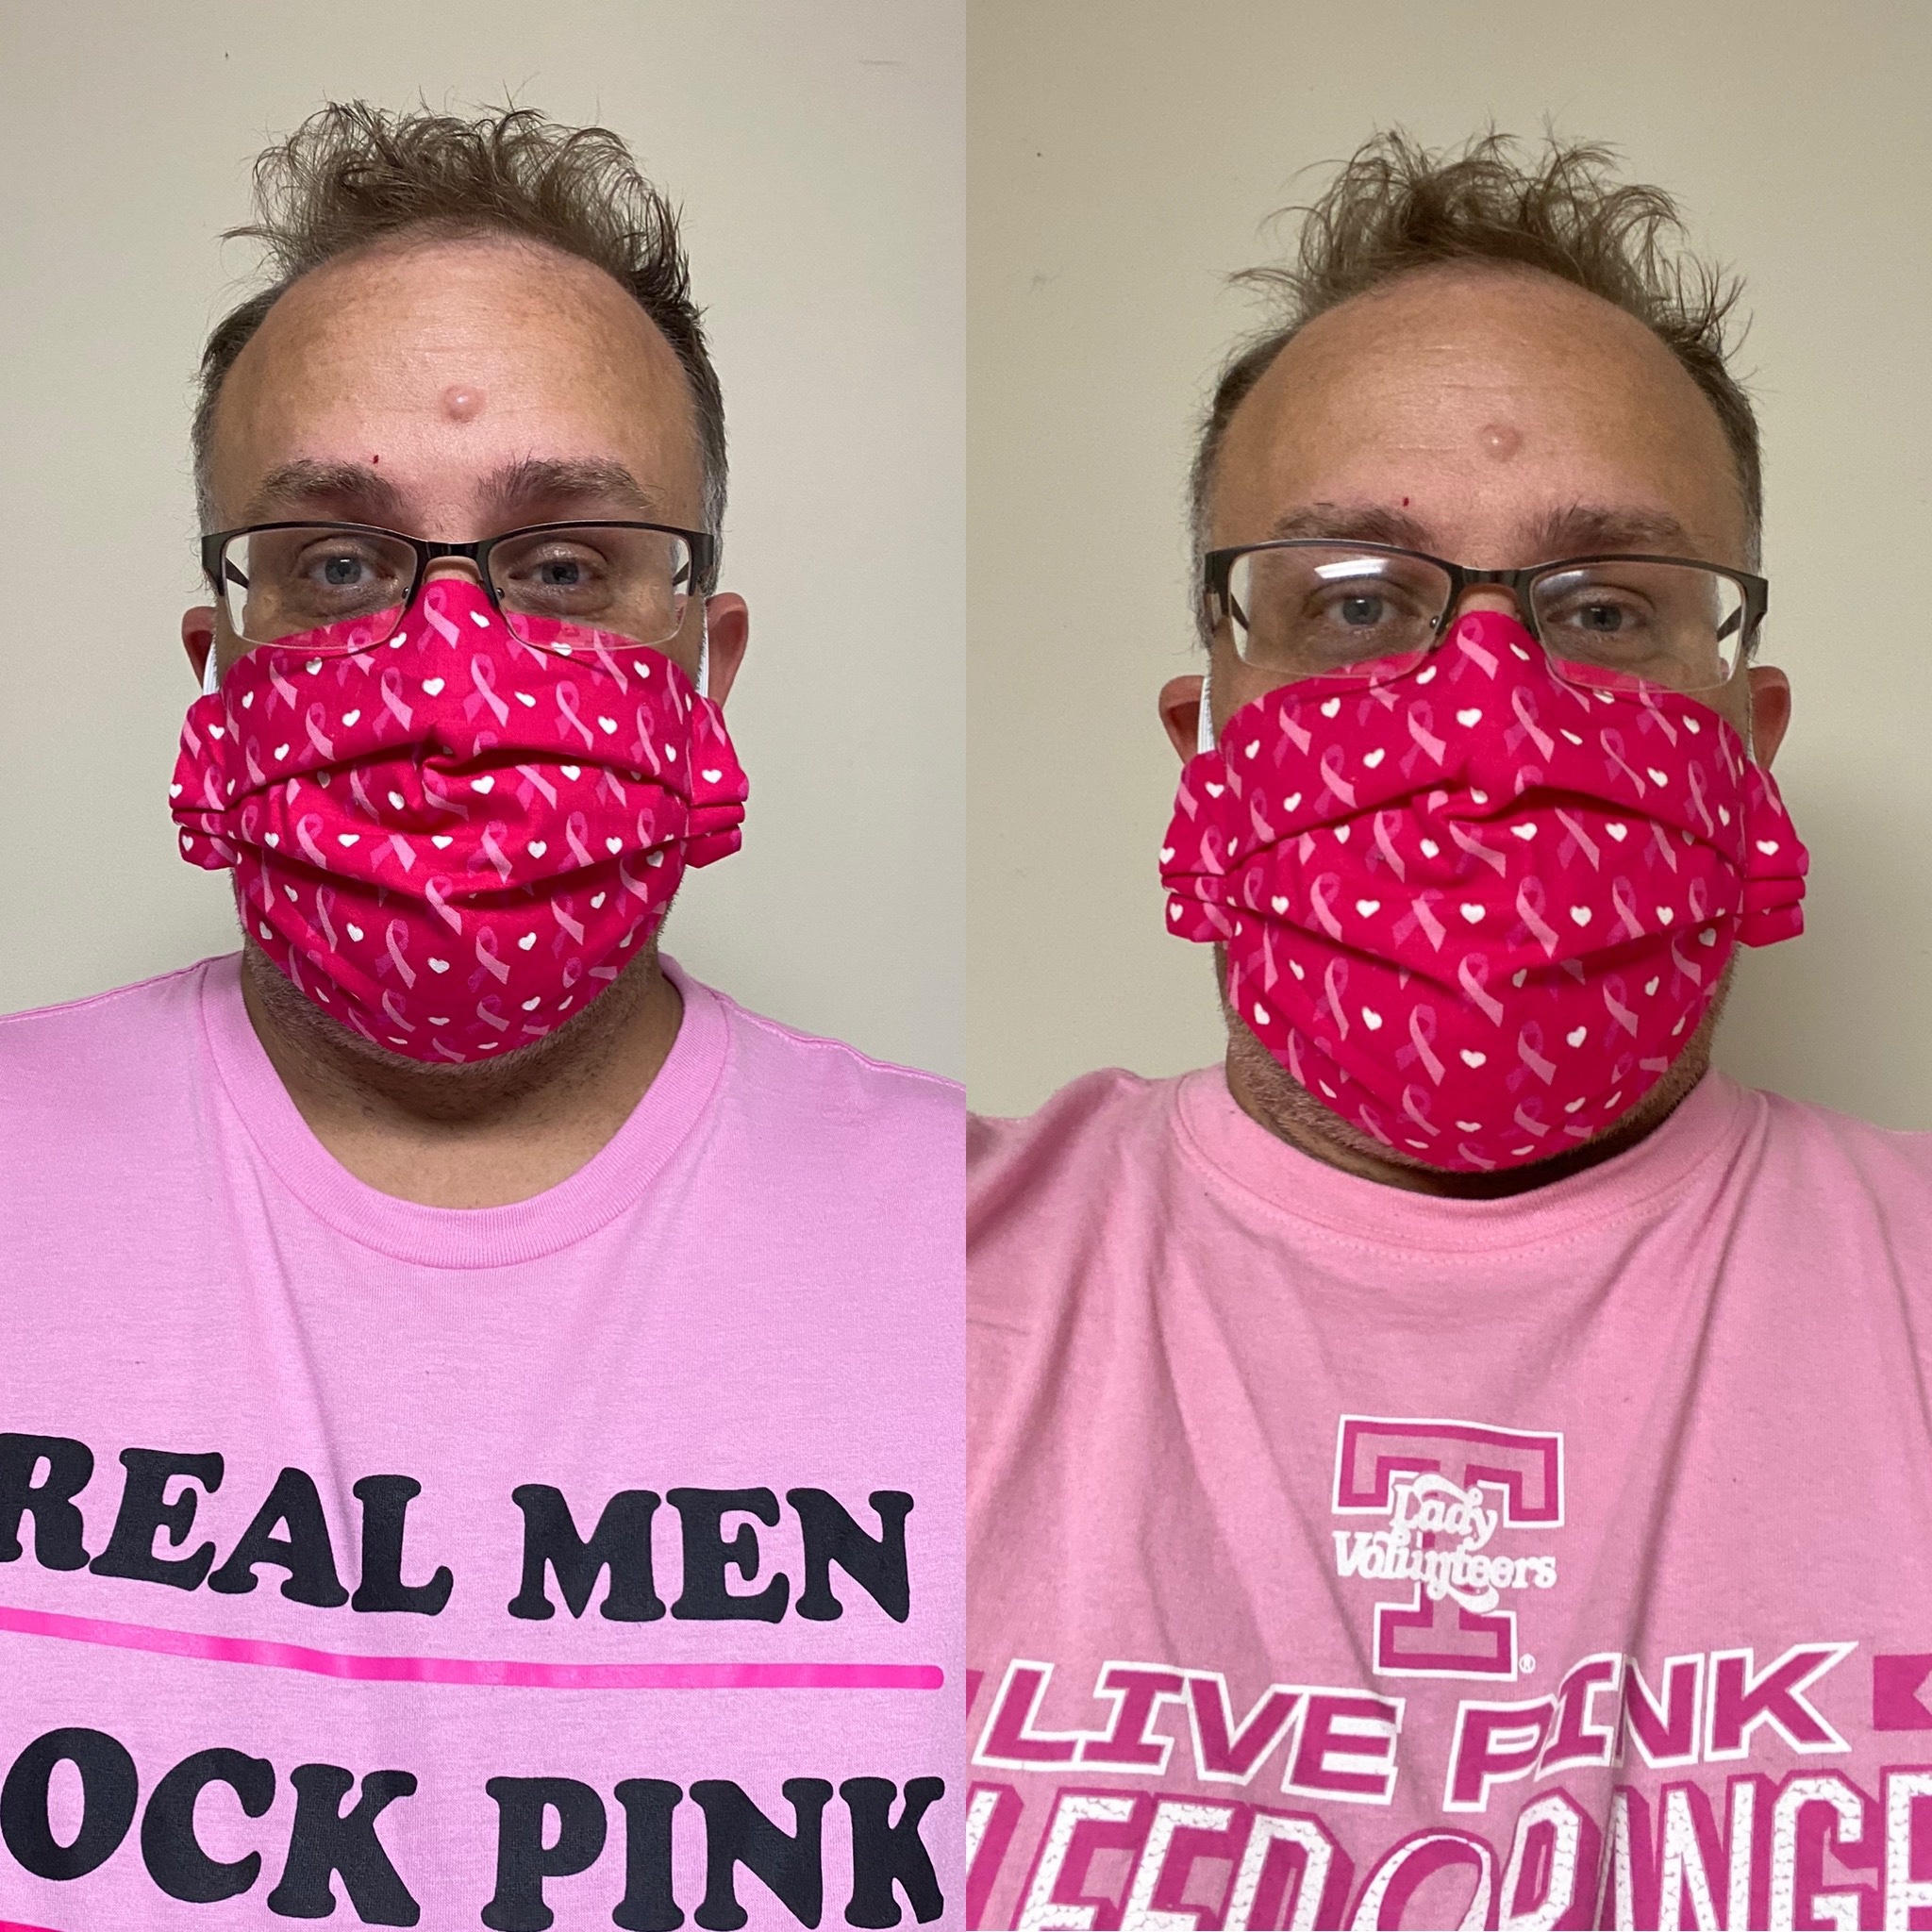 Real Men Wear Pink - Real Men Rock Pink - Steve wearing Pink 2020